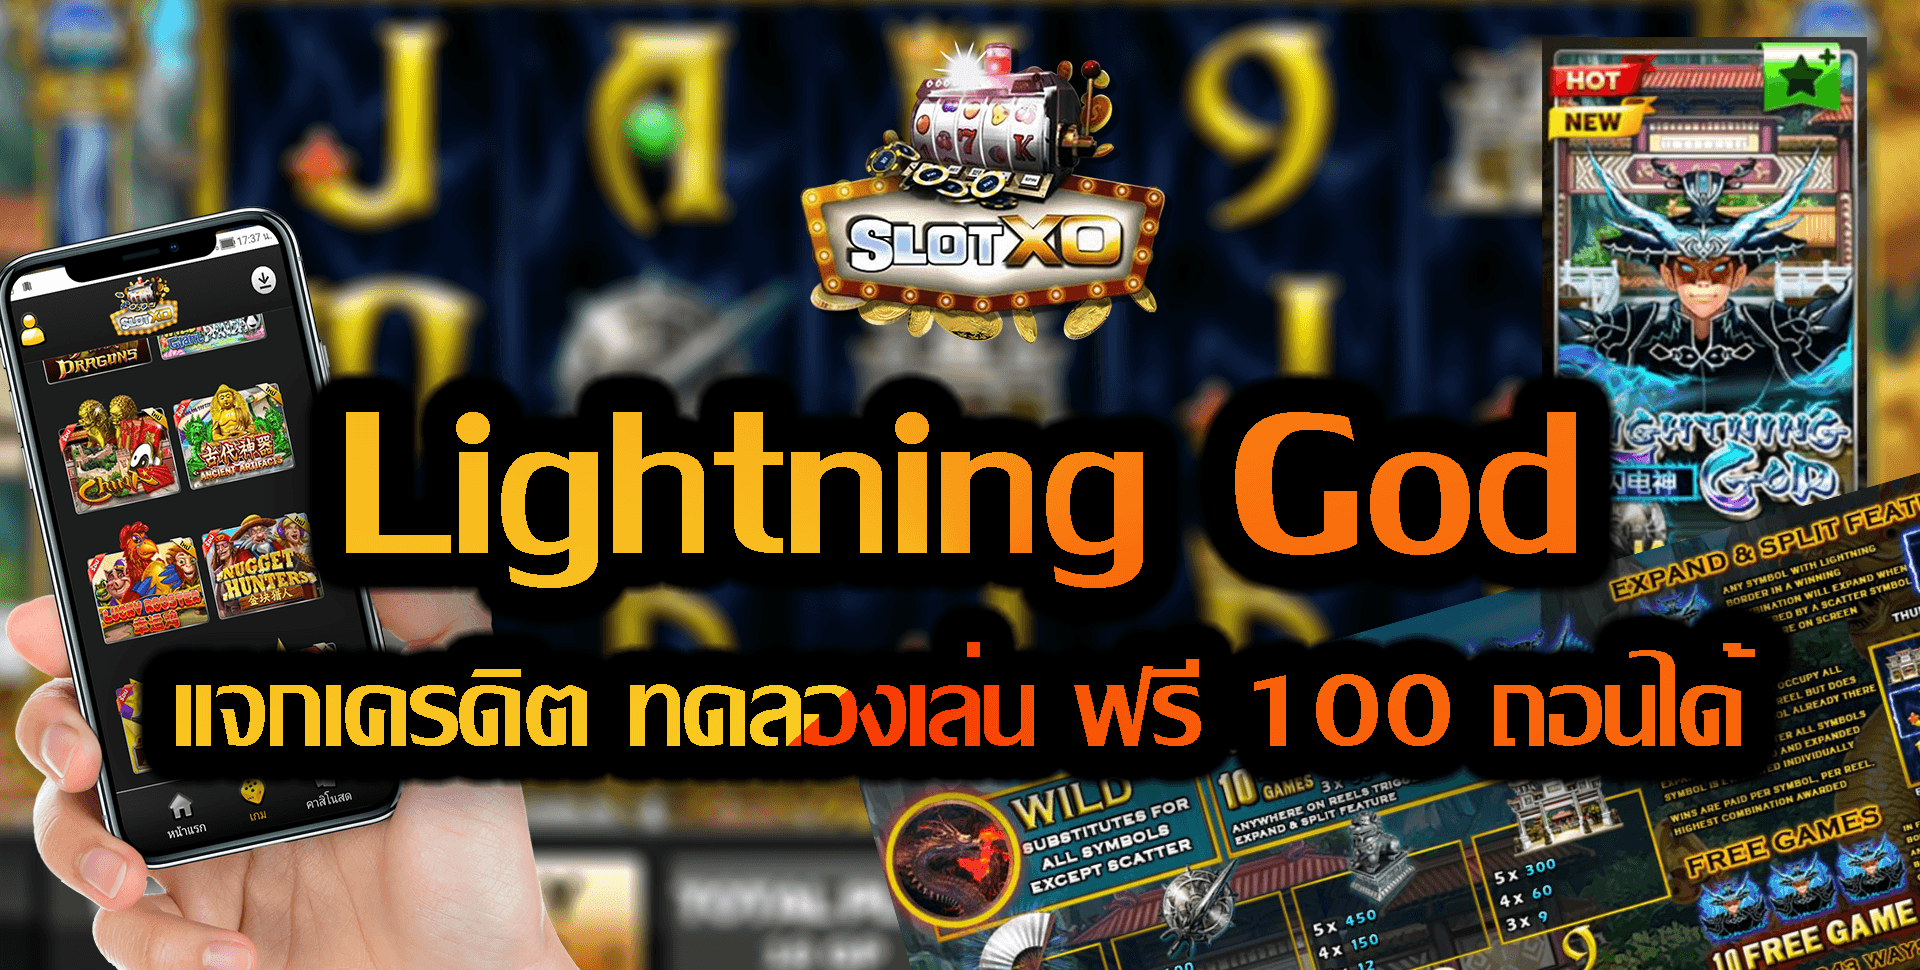 Slotxo-Slot xo-Lightning-God-5